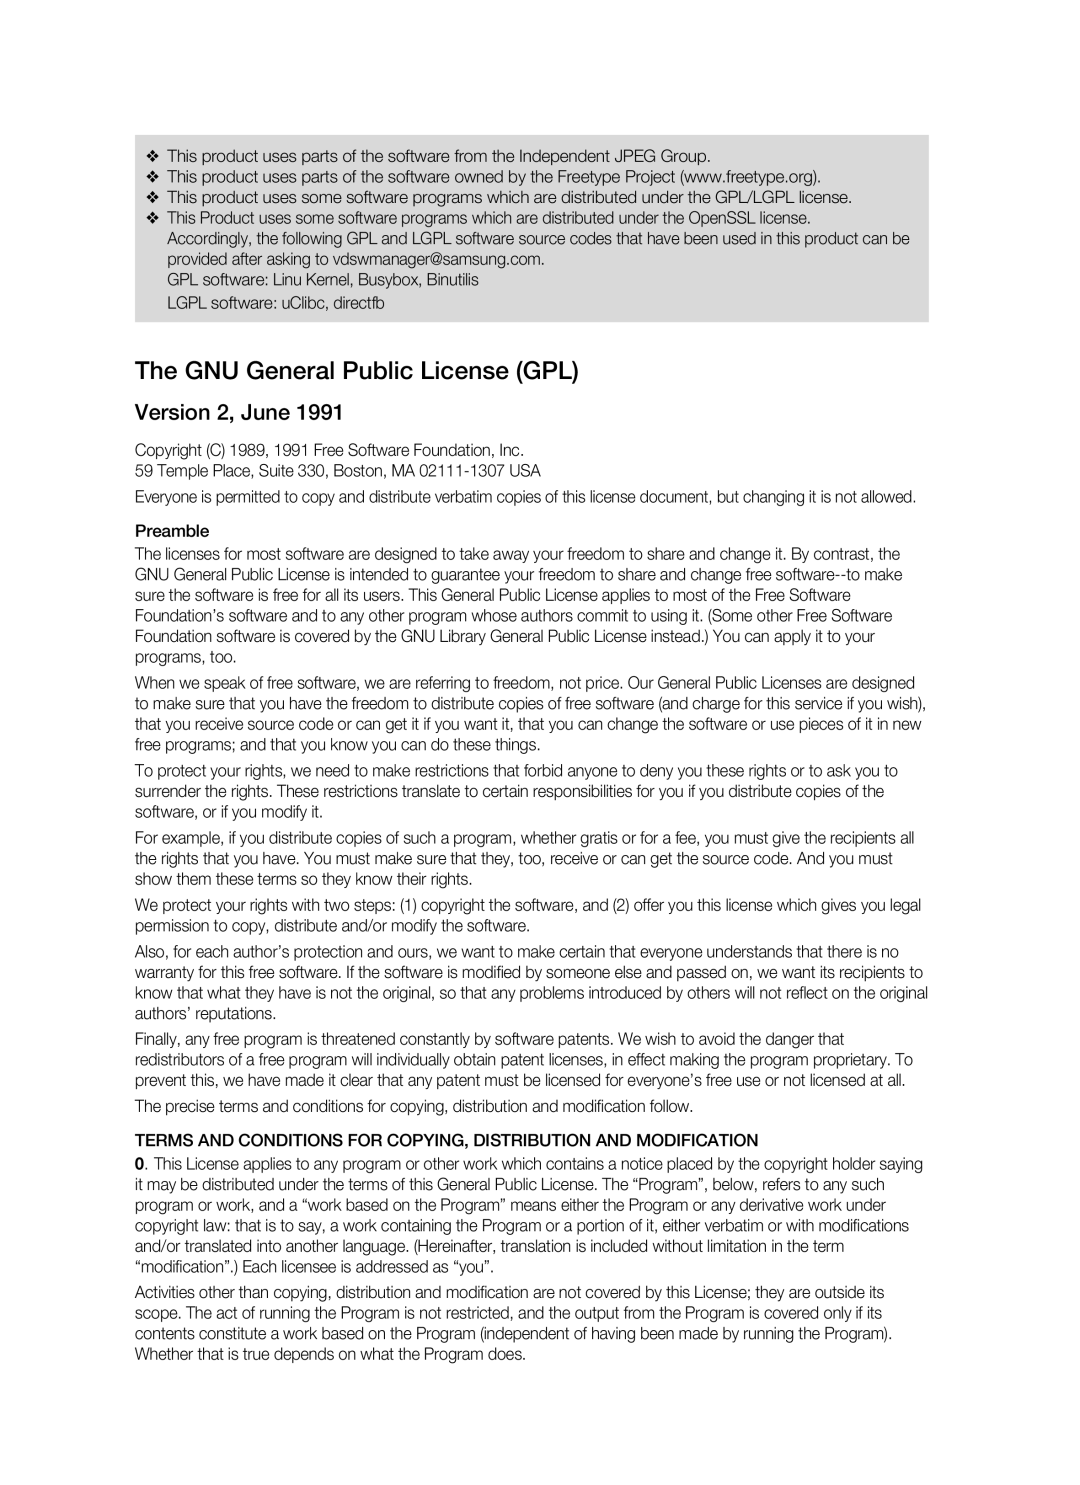 Samsung HT-BD3252 user manual The GNU General Public License GPL, Version 2, June 